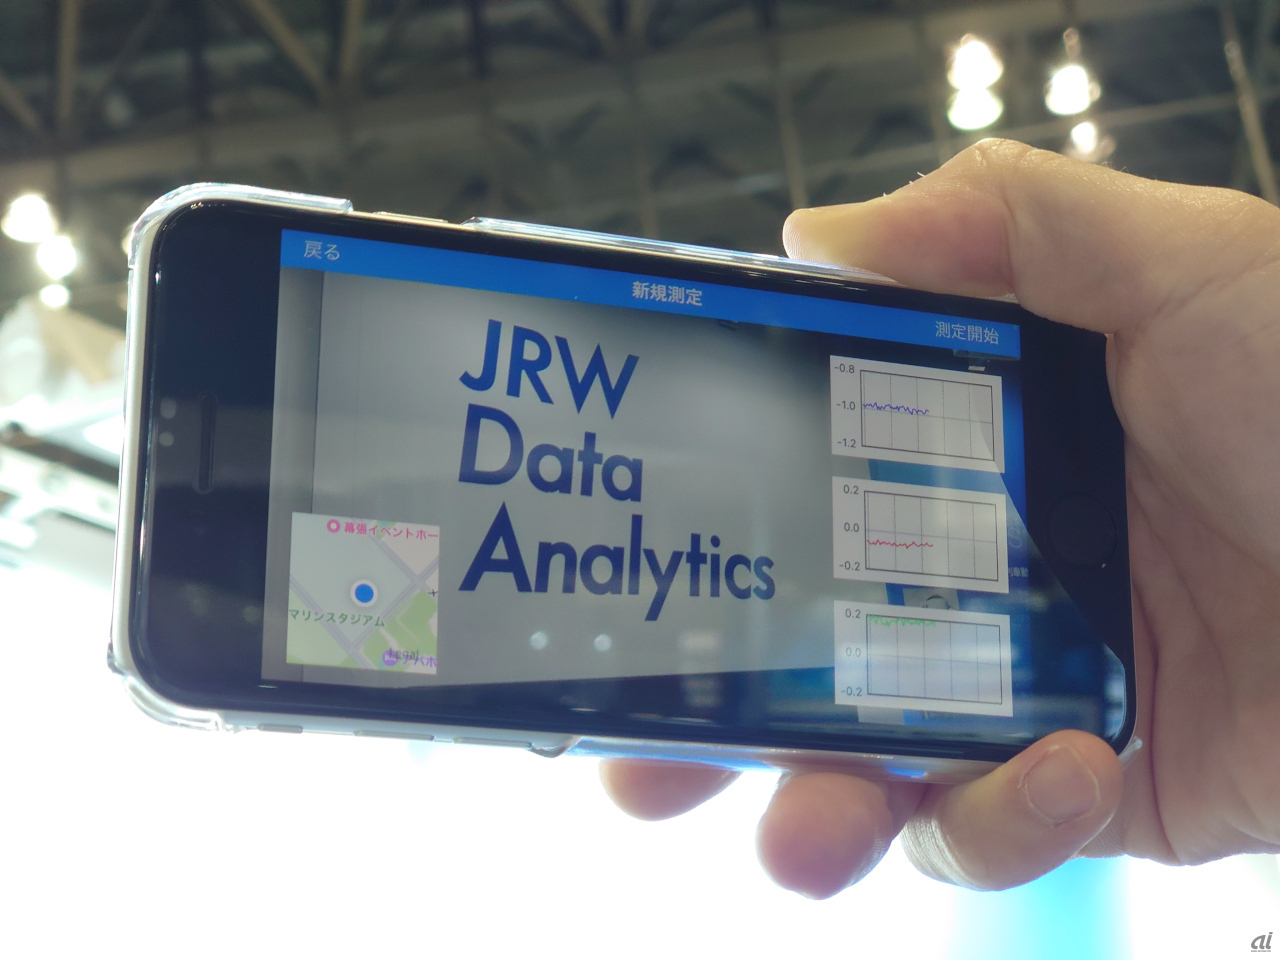 JR西日本が出品した「スマートフォンを活用した振動解析アプリ」